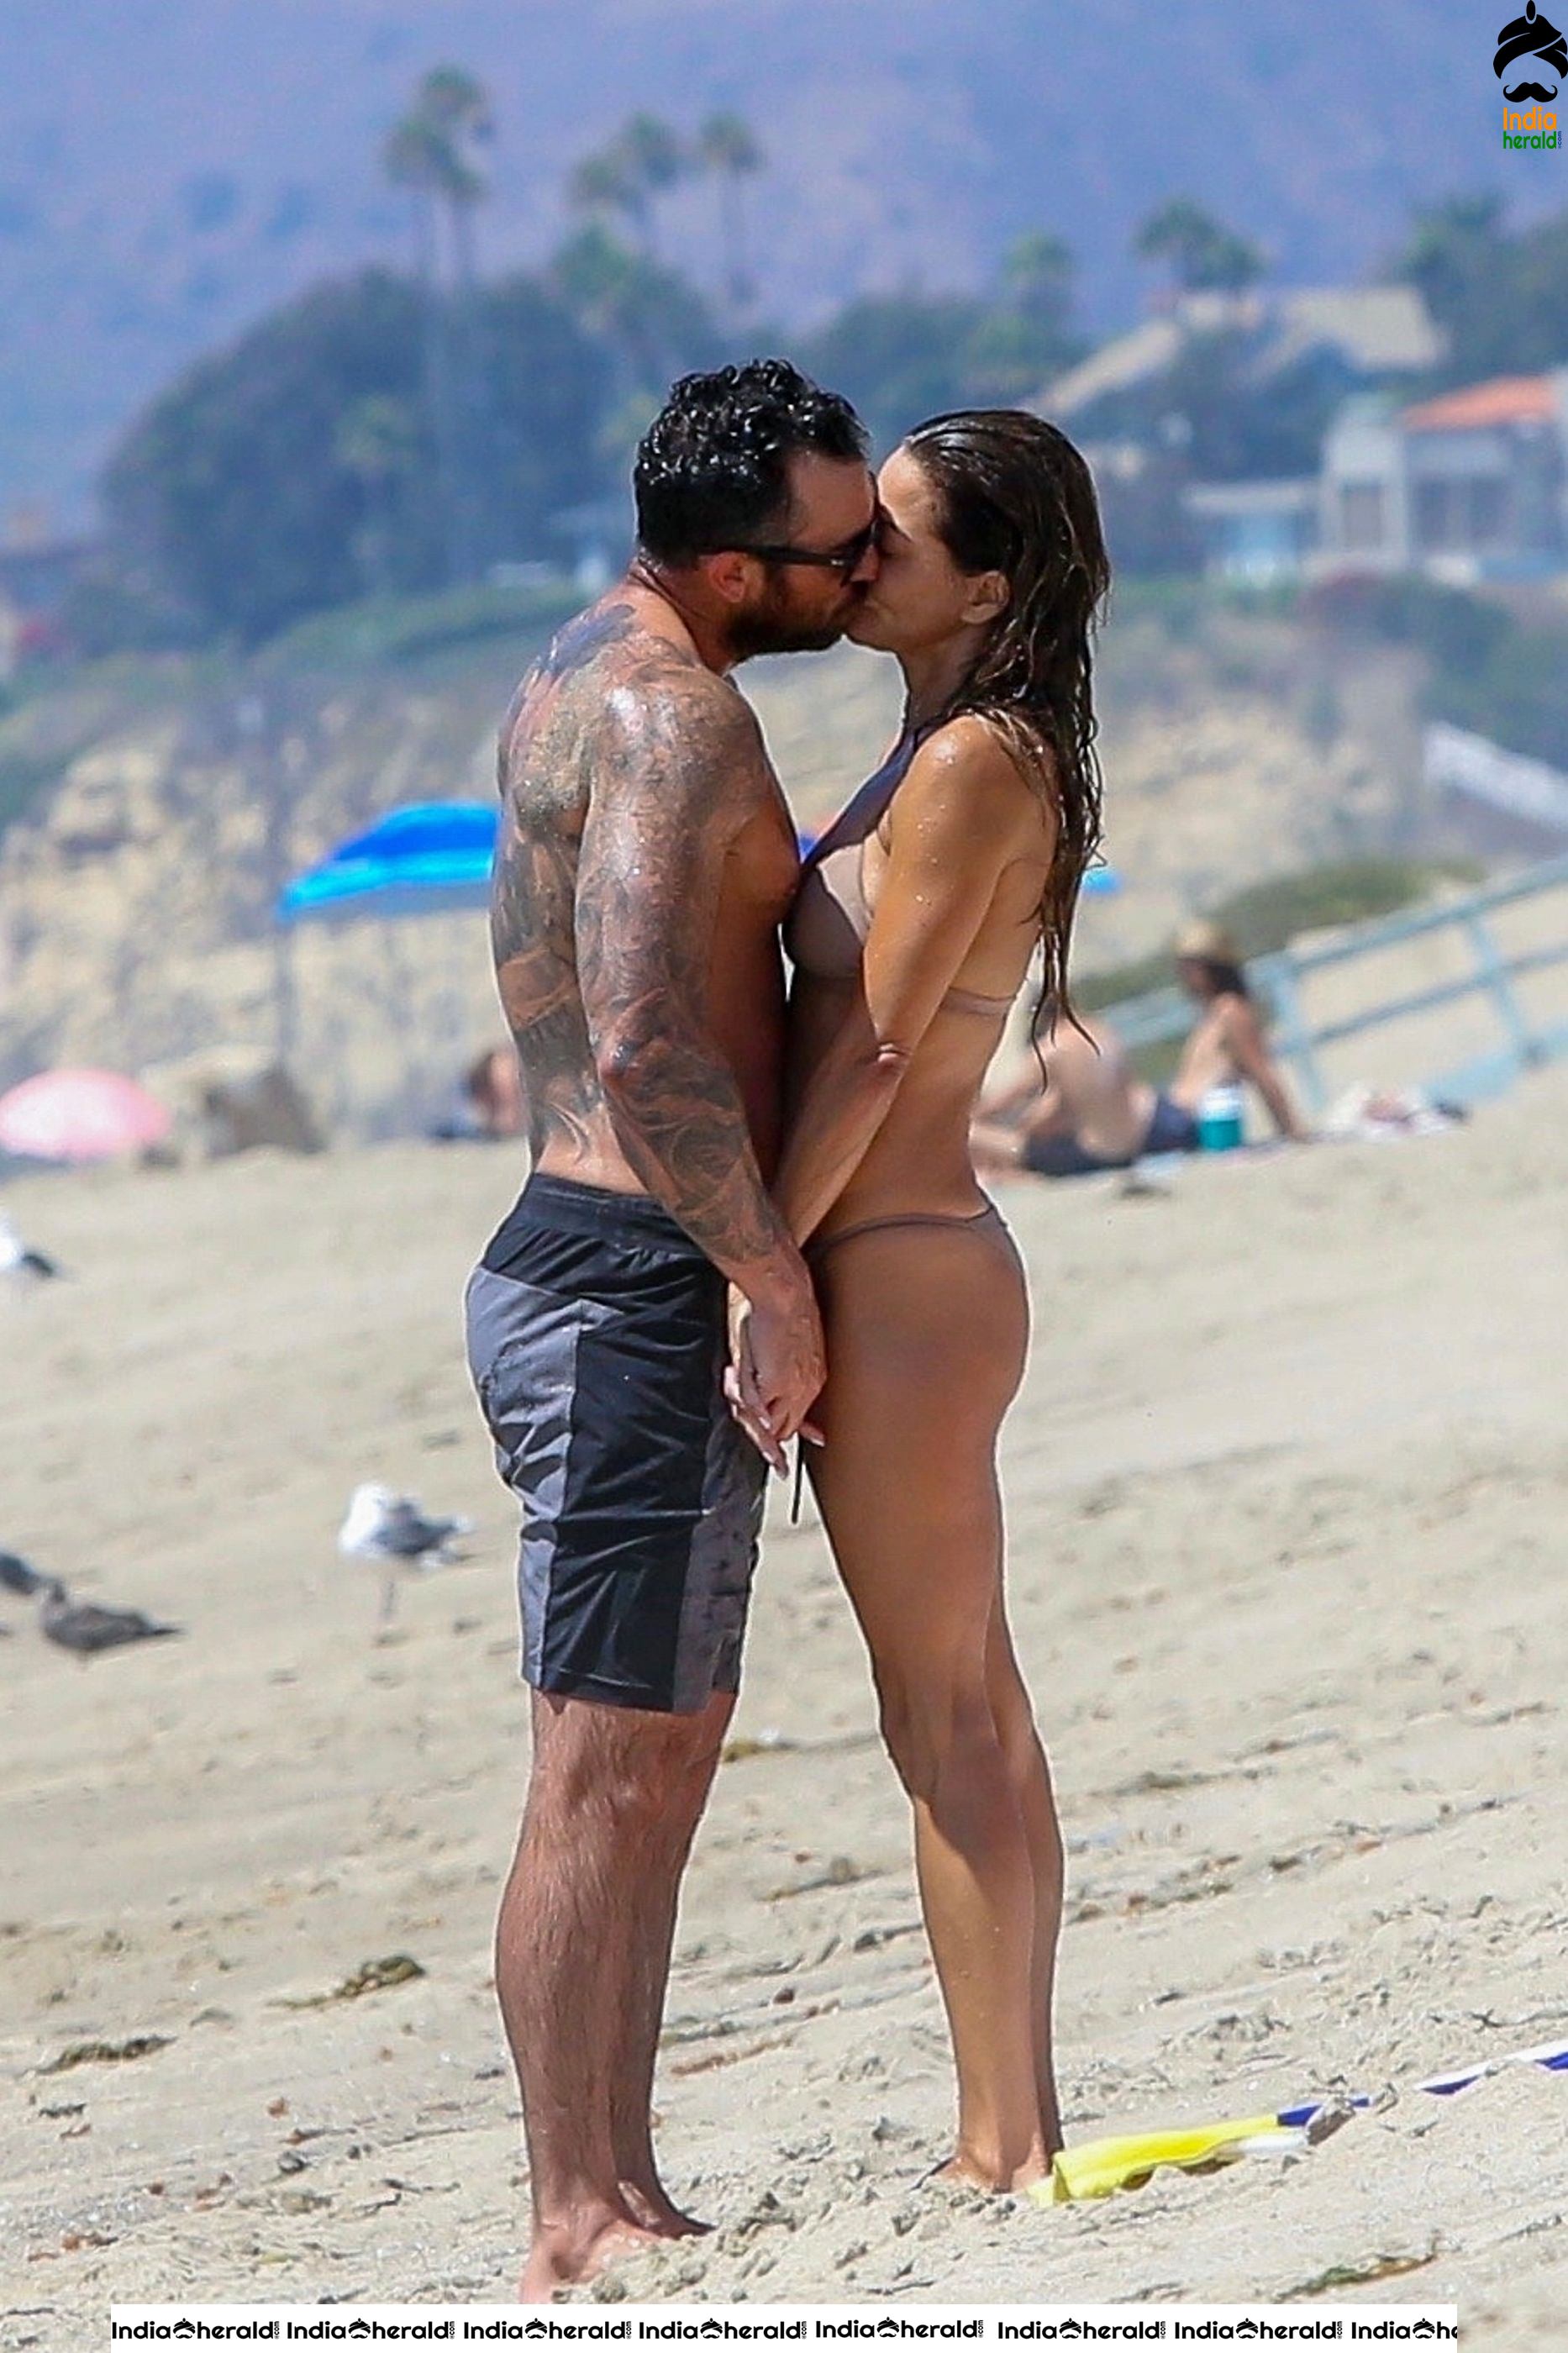 Brooke Burke in Bikini and Enjoying with Boyfriend by Getting Wet on Beach Set 1